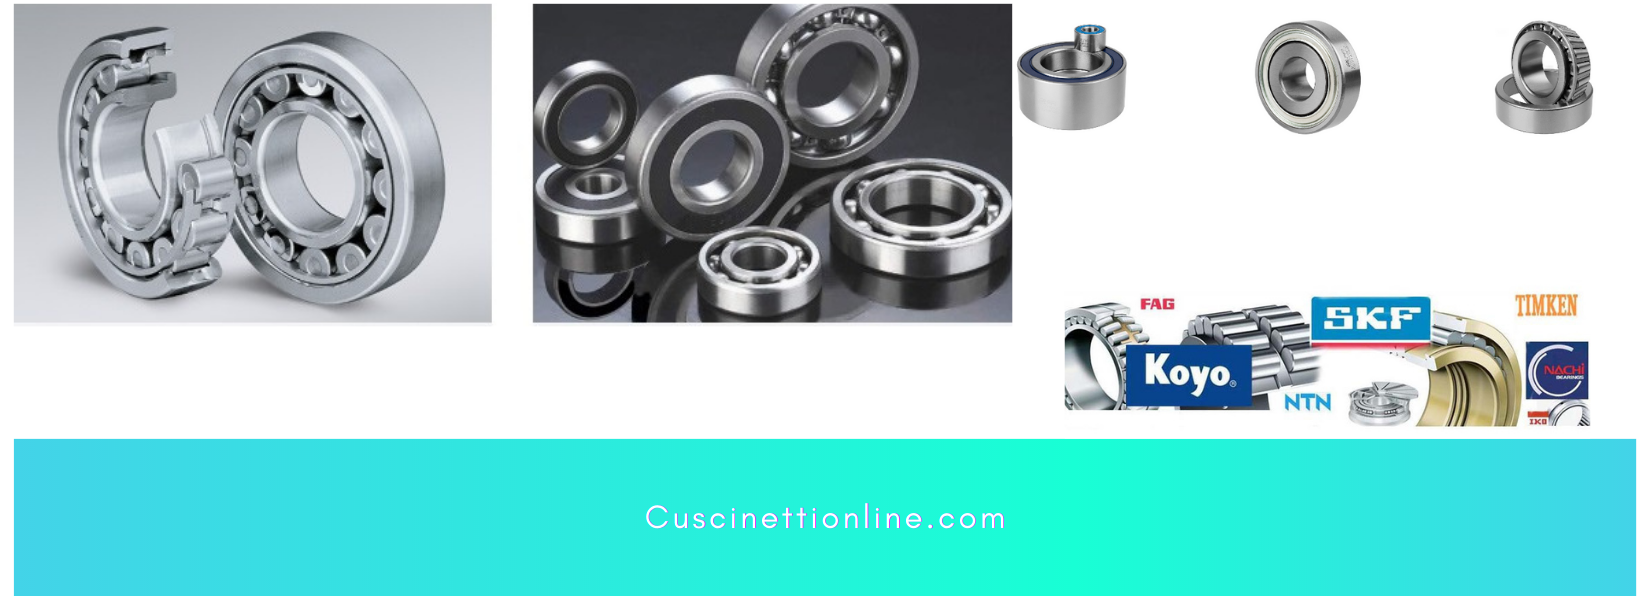 cuscinettionline.com Bearings High Quality